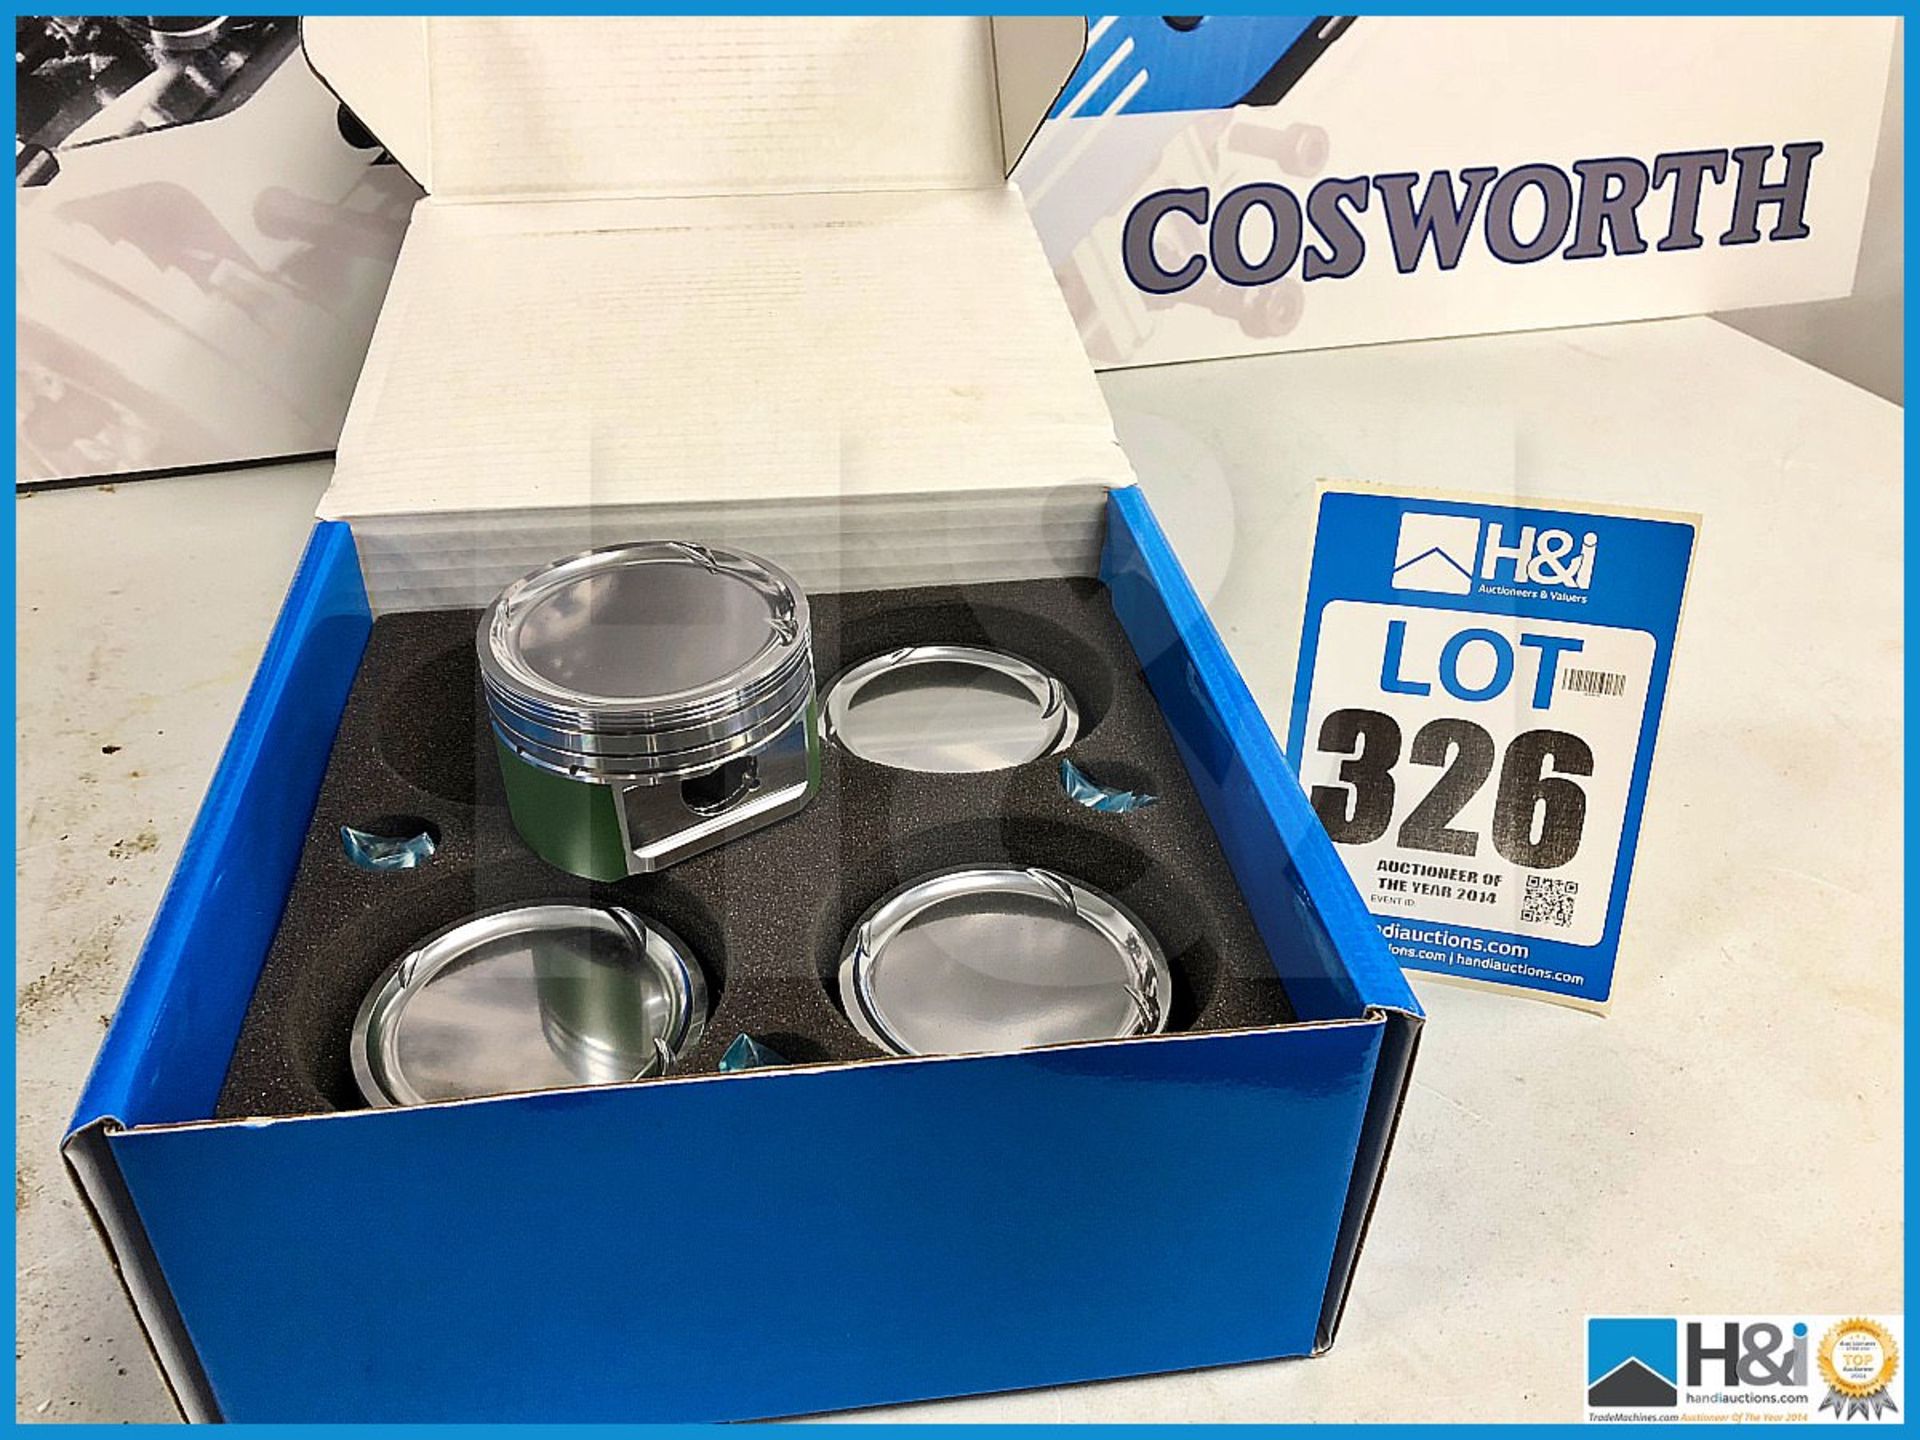 2 x Sets Cosworth Mitsubishi 4G63 Pistons (4 pistons per set) 8.8:1. +1.00 94mm. Code: 20003693. Lot